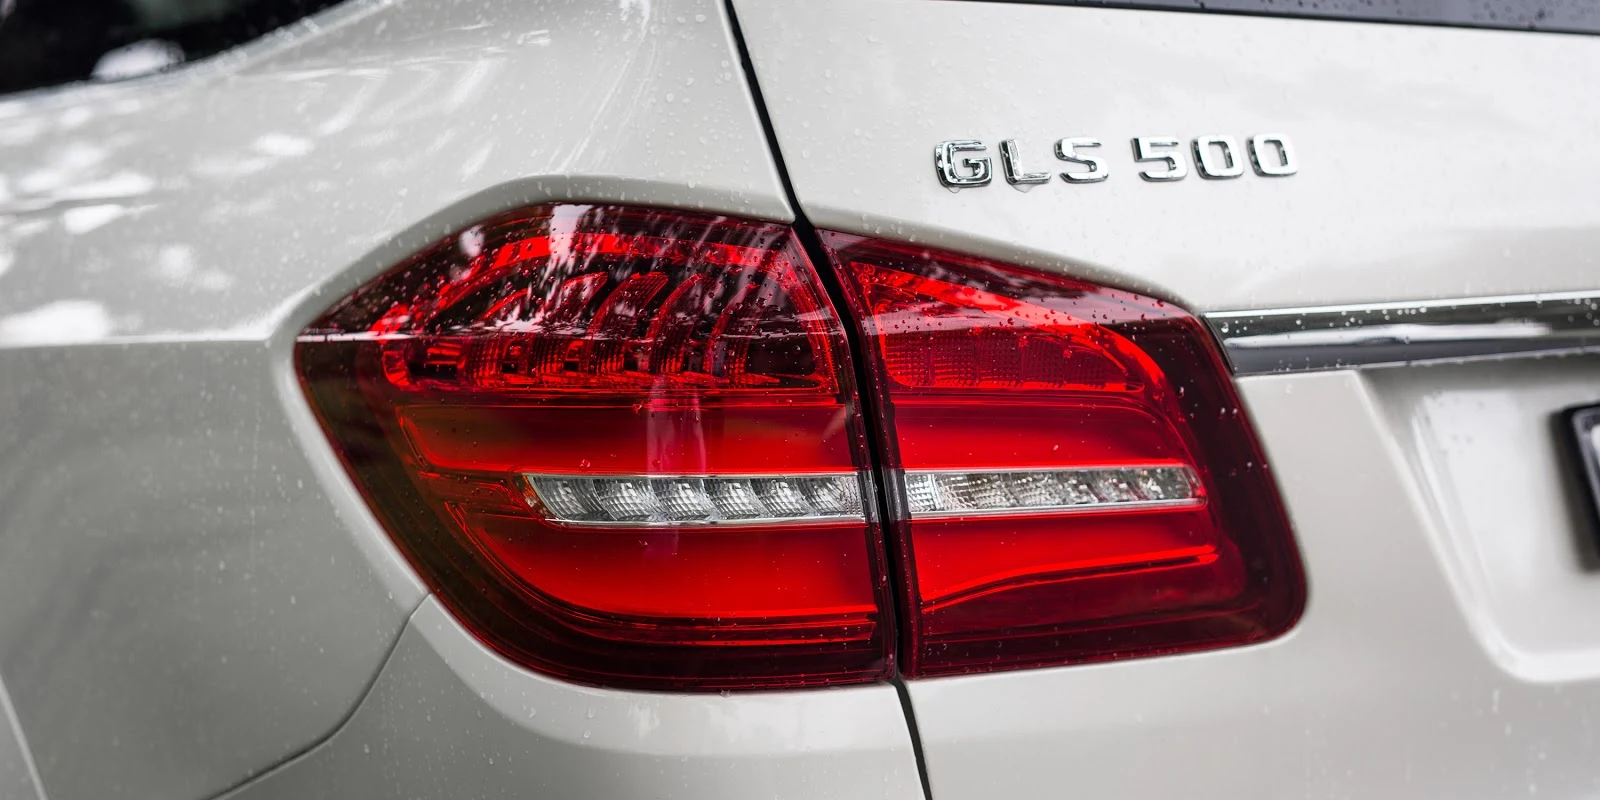 Đánh giá xe Mercedes Benz GLS 2016